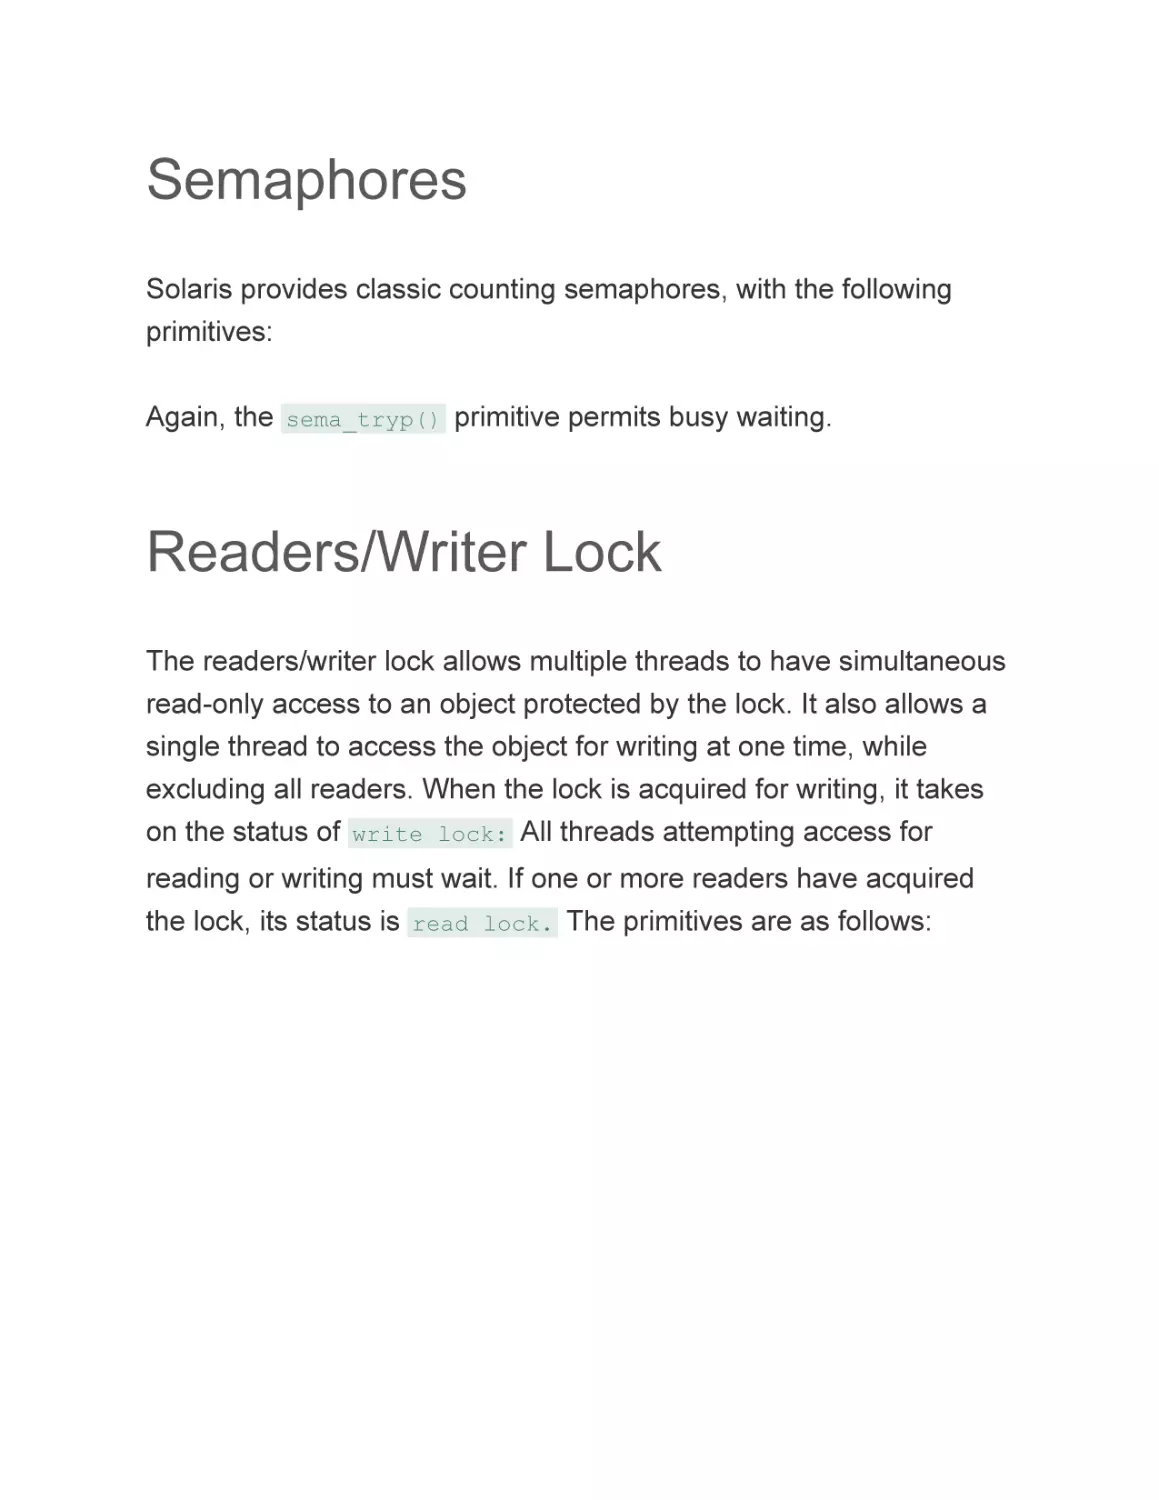 Semaphores
Readers/Writer Lock